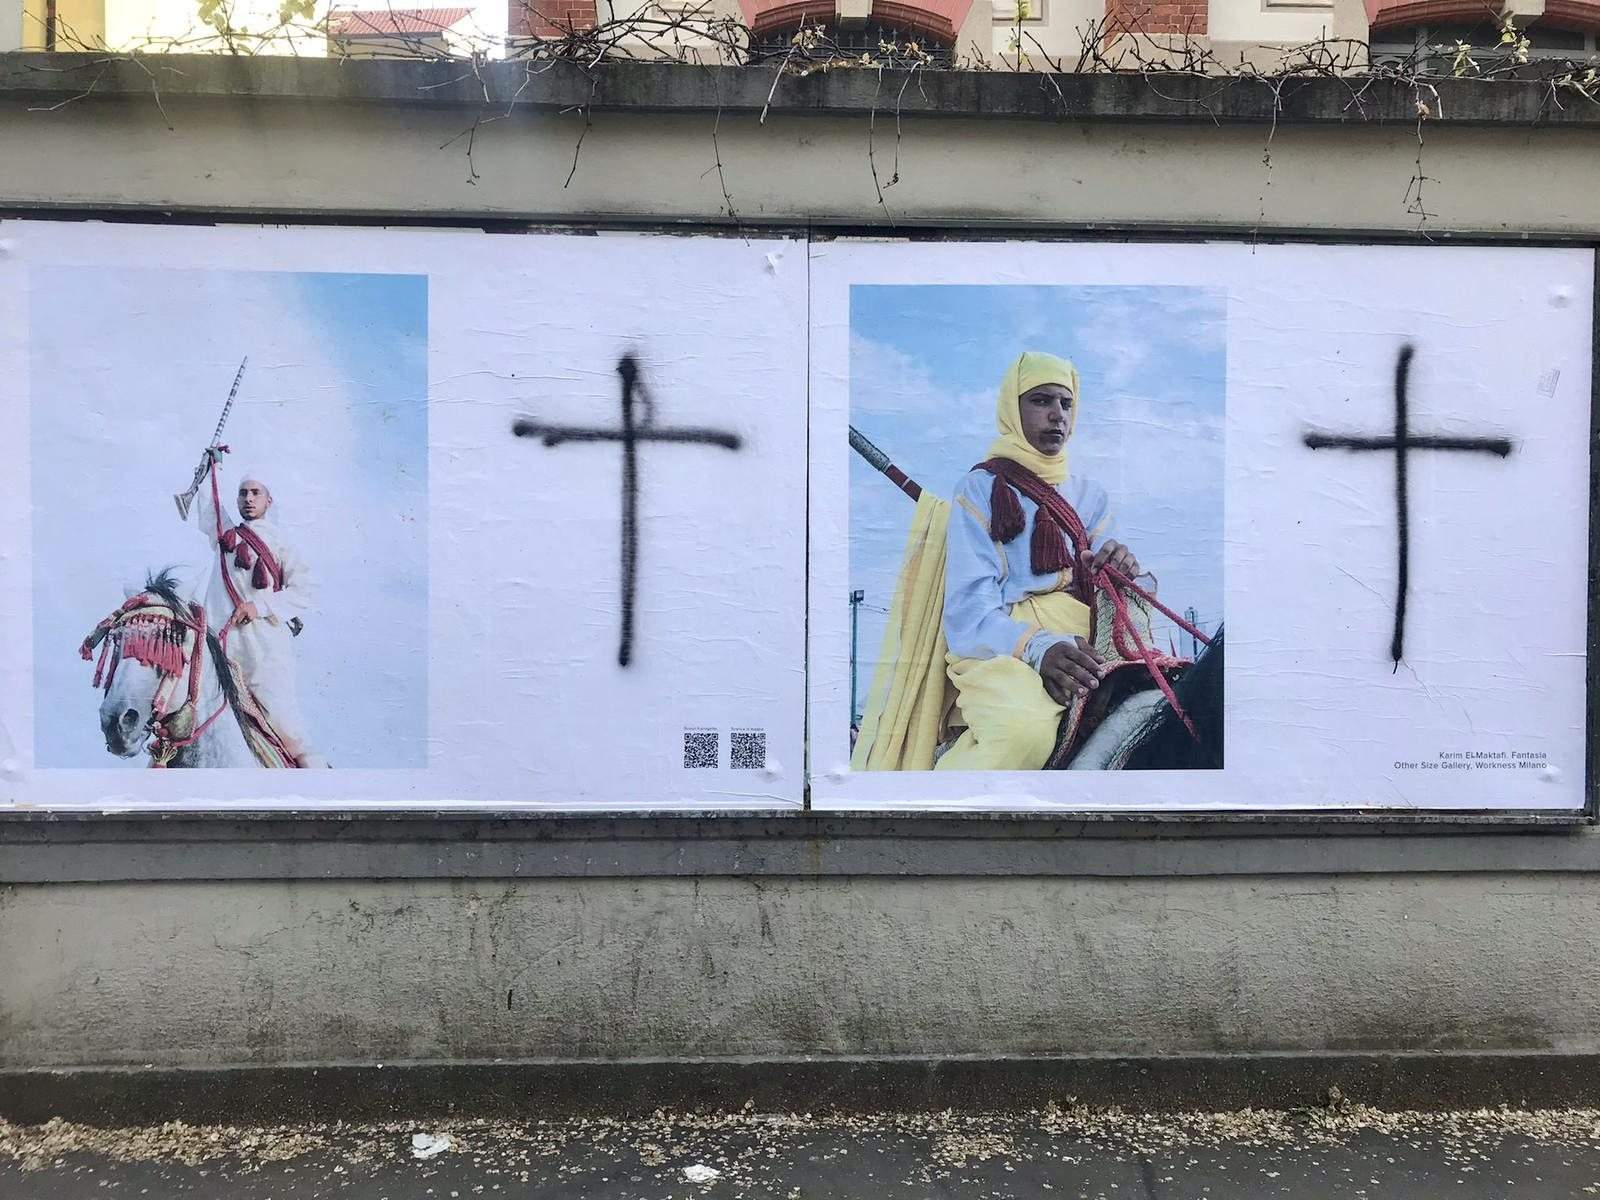 Milan, intolerant people vandalize works of artist Karim El Maktafi. And he reacts with art